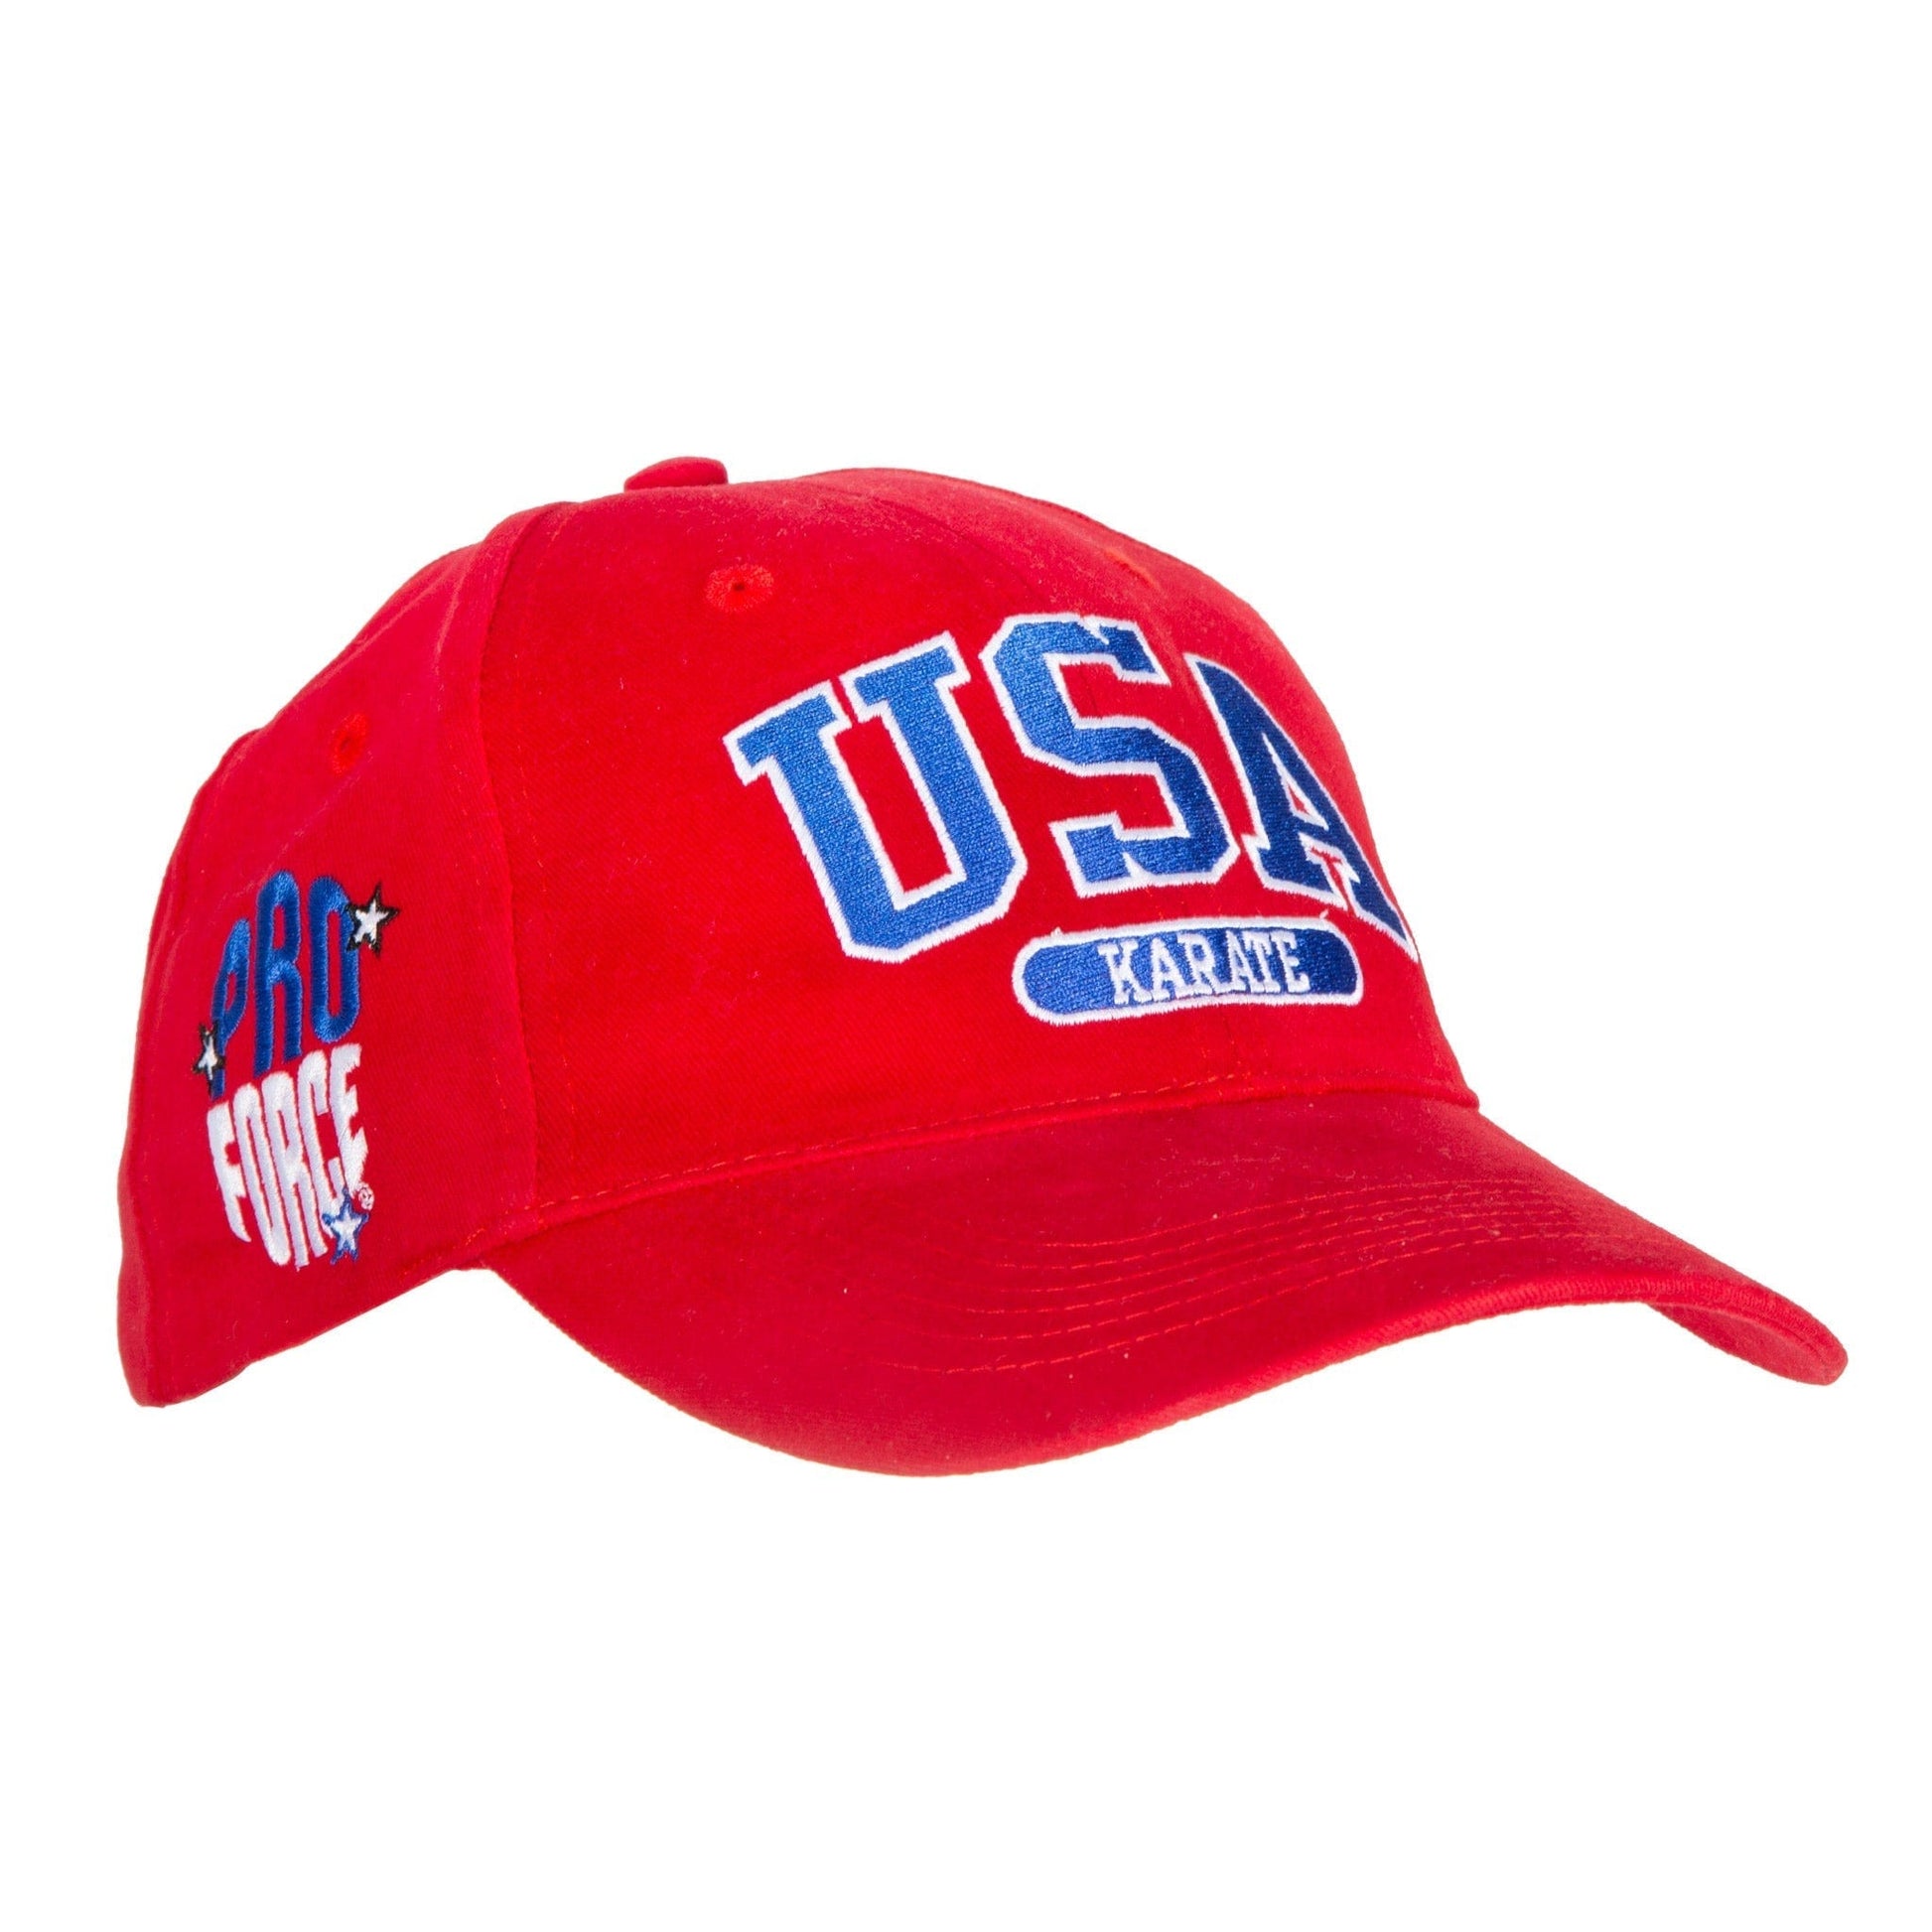 ProForce sporting goods adjustable / red ProForce USA Baseball Karate Martial Art Hats